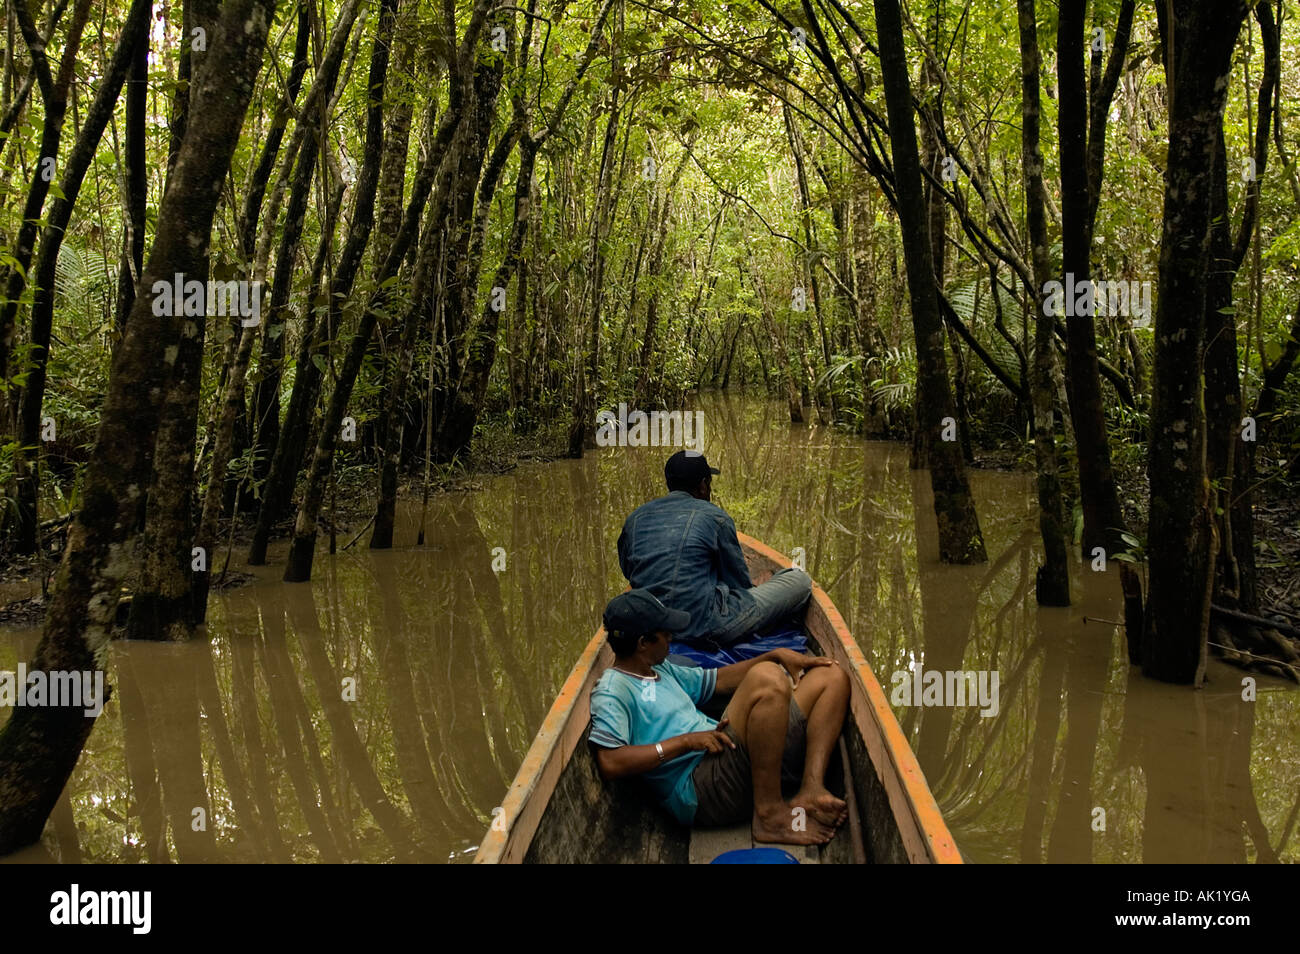 Traveling through Irian Jaya's dense mangrove forests, Indonesia. Stock Photo